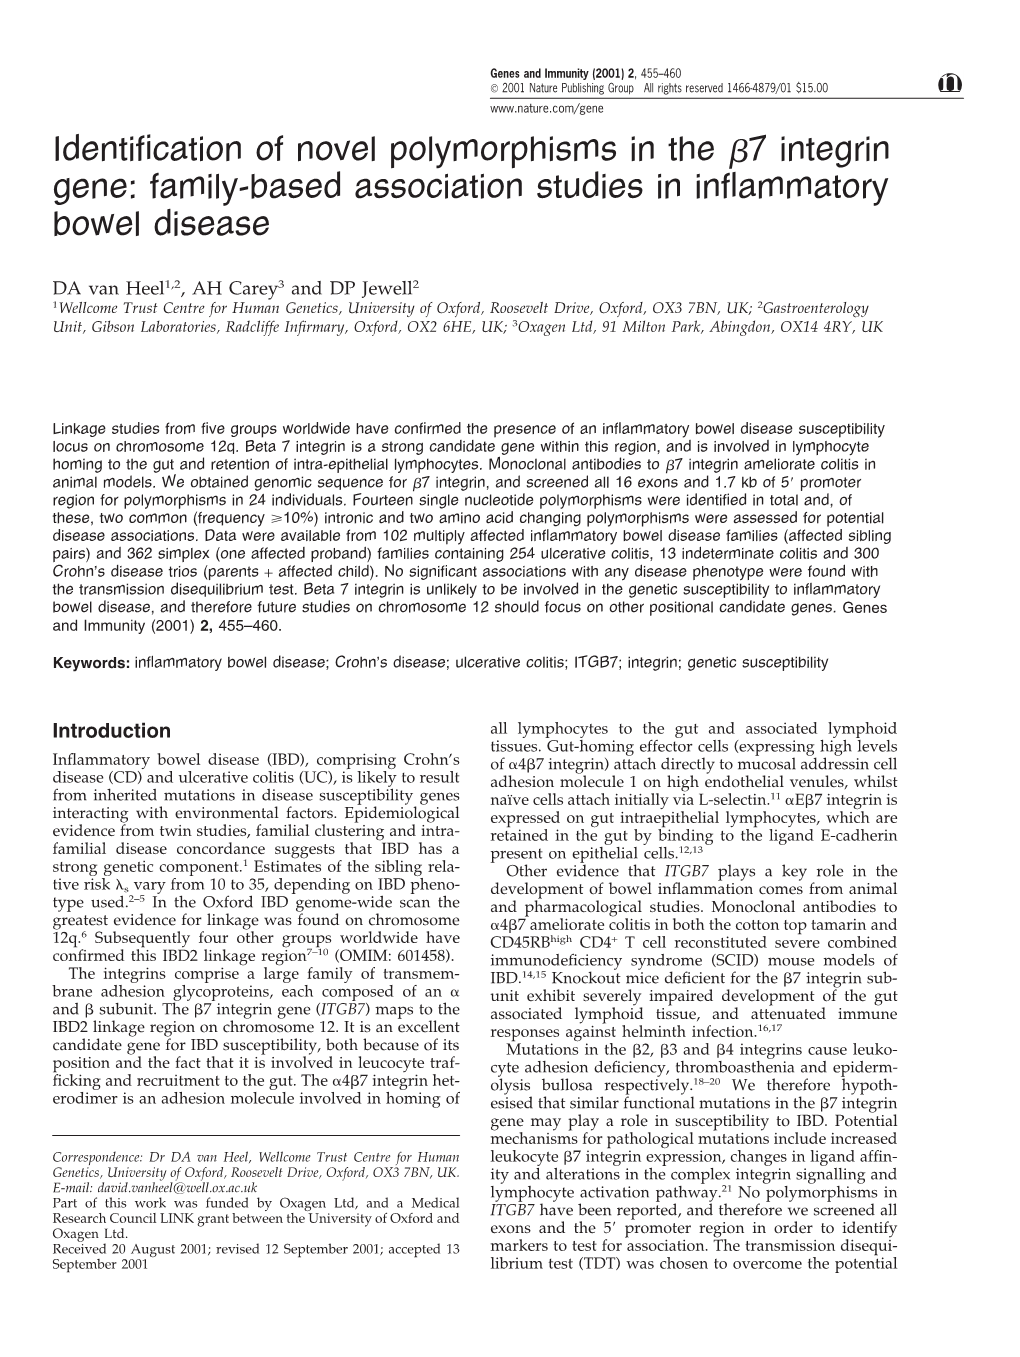 Identification of Novel Polymorphisms in the 7 Integrin Gene: Family-Based Association Studies in Inflammatory Bowel Disease